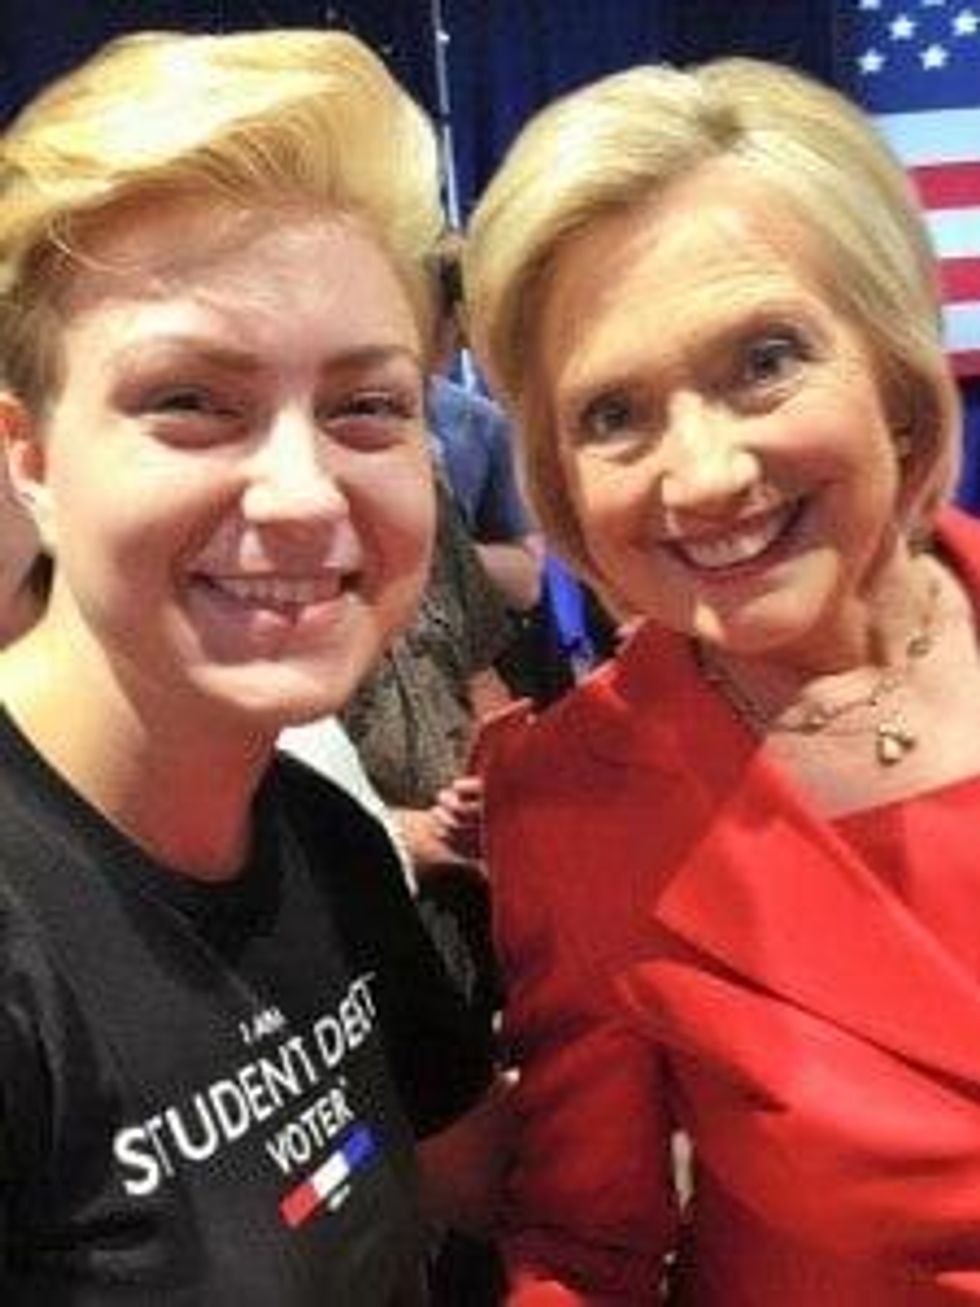 T-shirt activist and Hilary